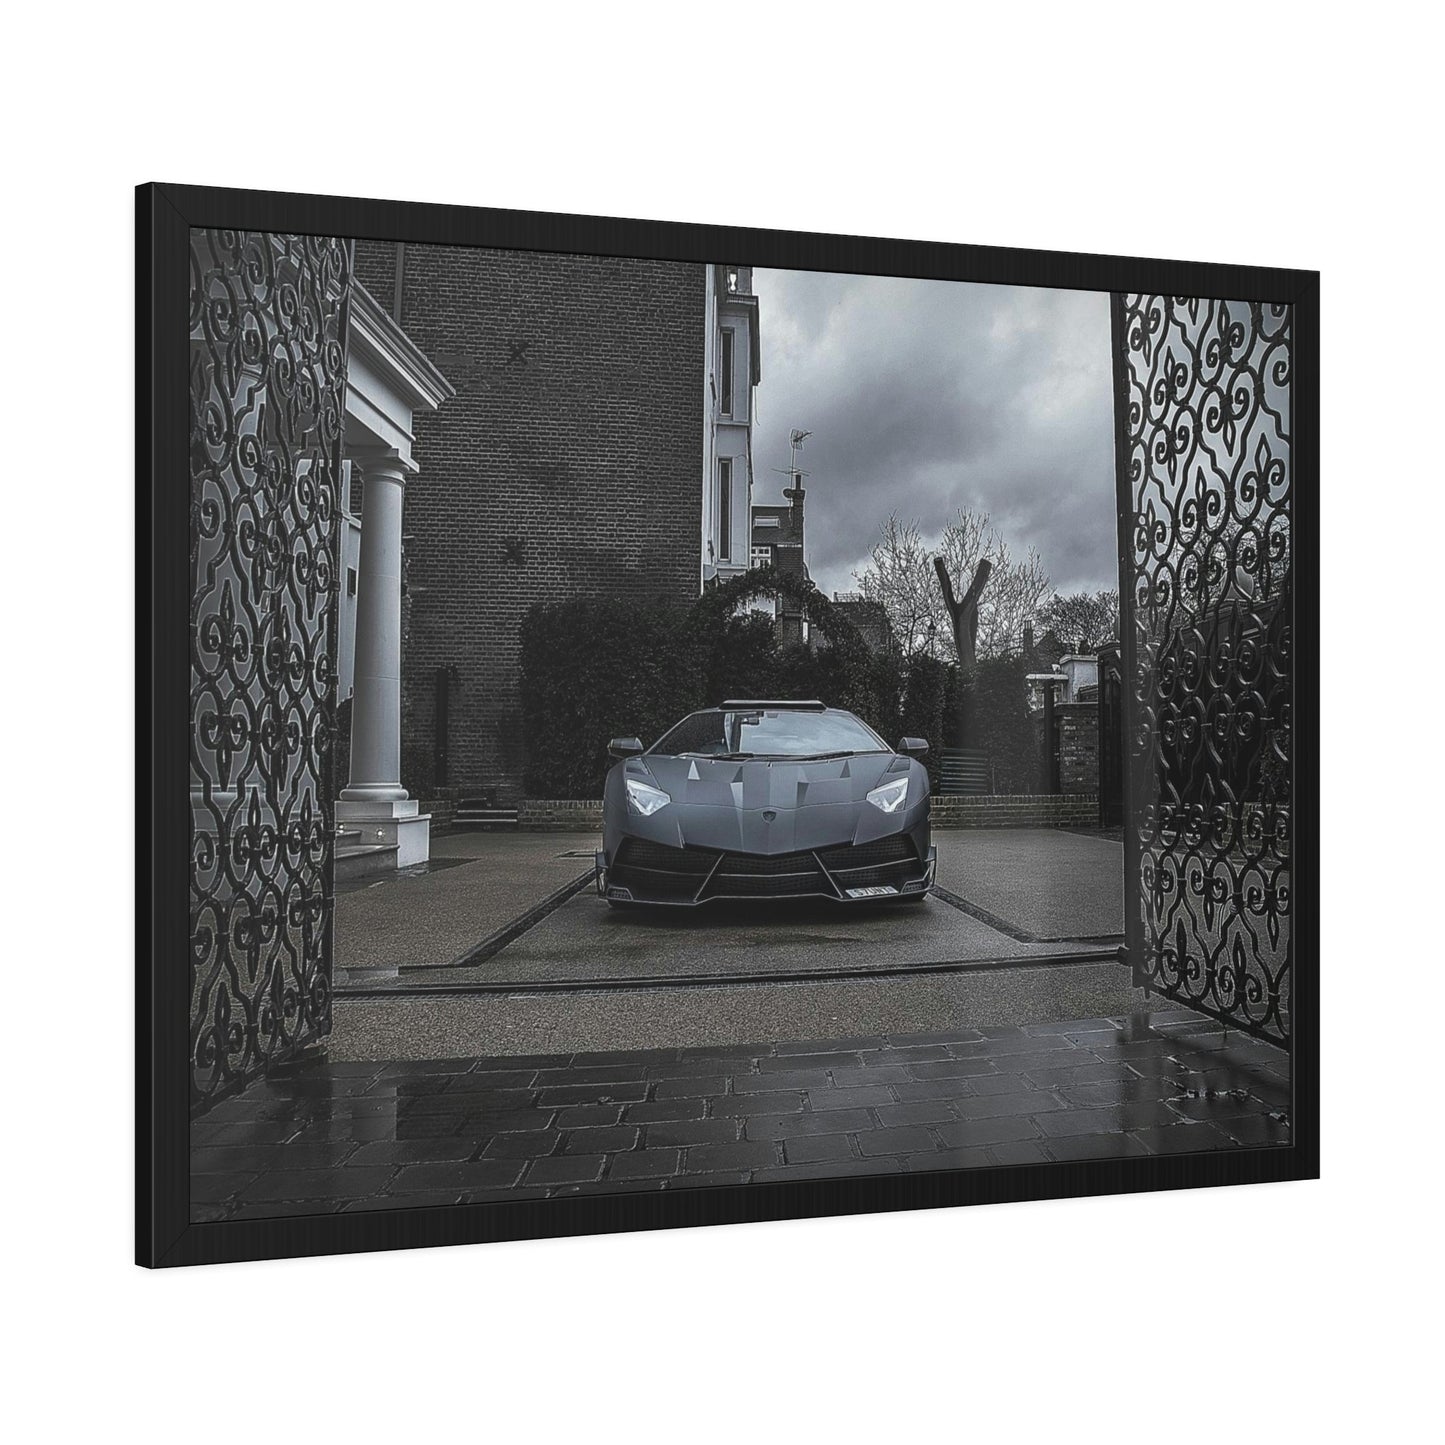 Speed Demon on Canvas & Poster: Captivating Artwork of Lamborghini